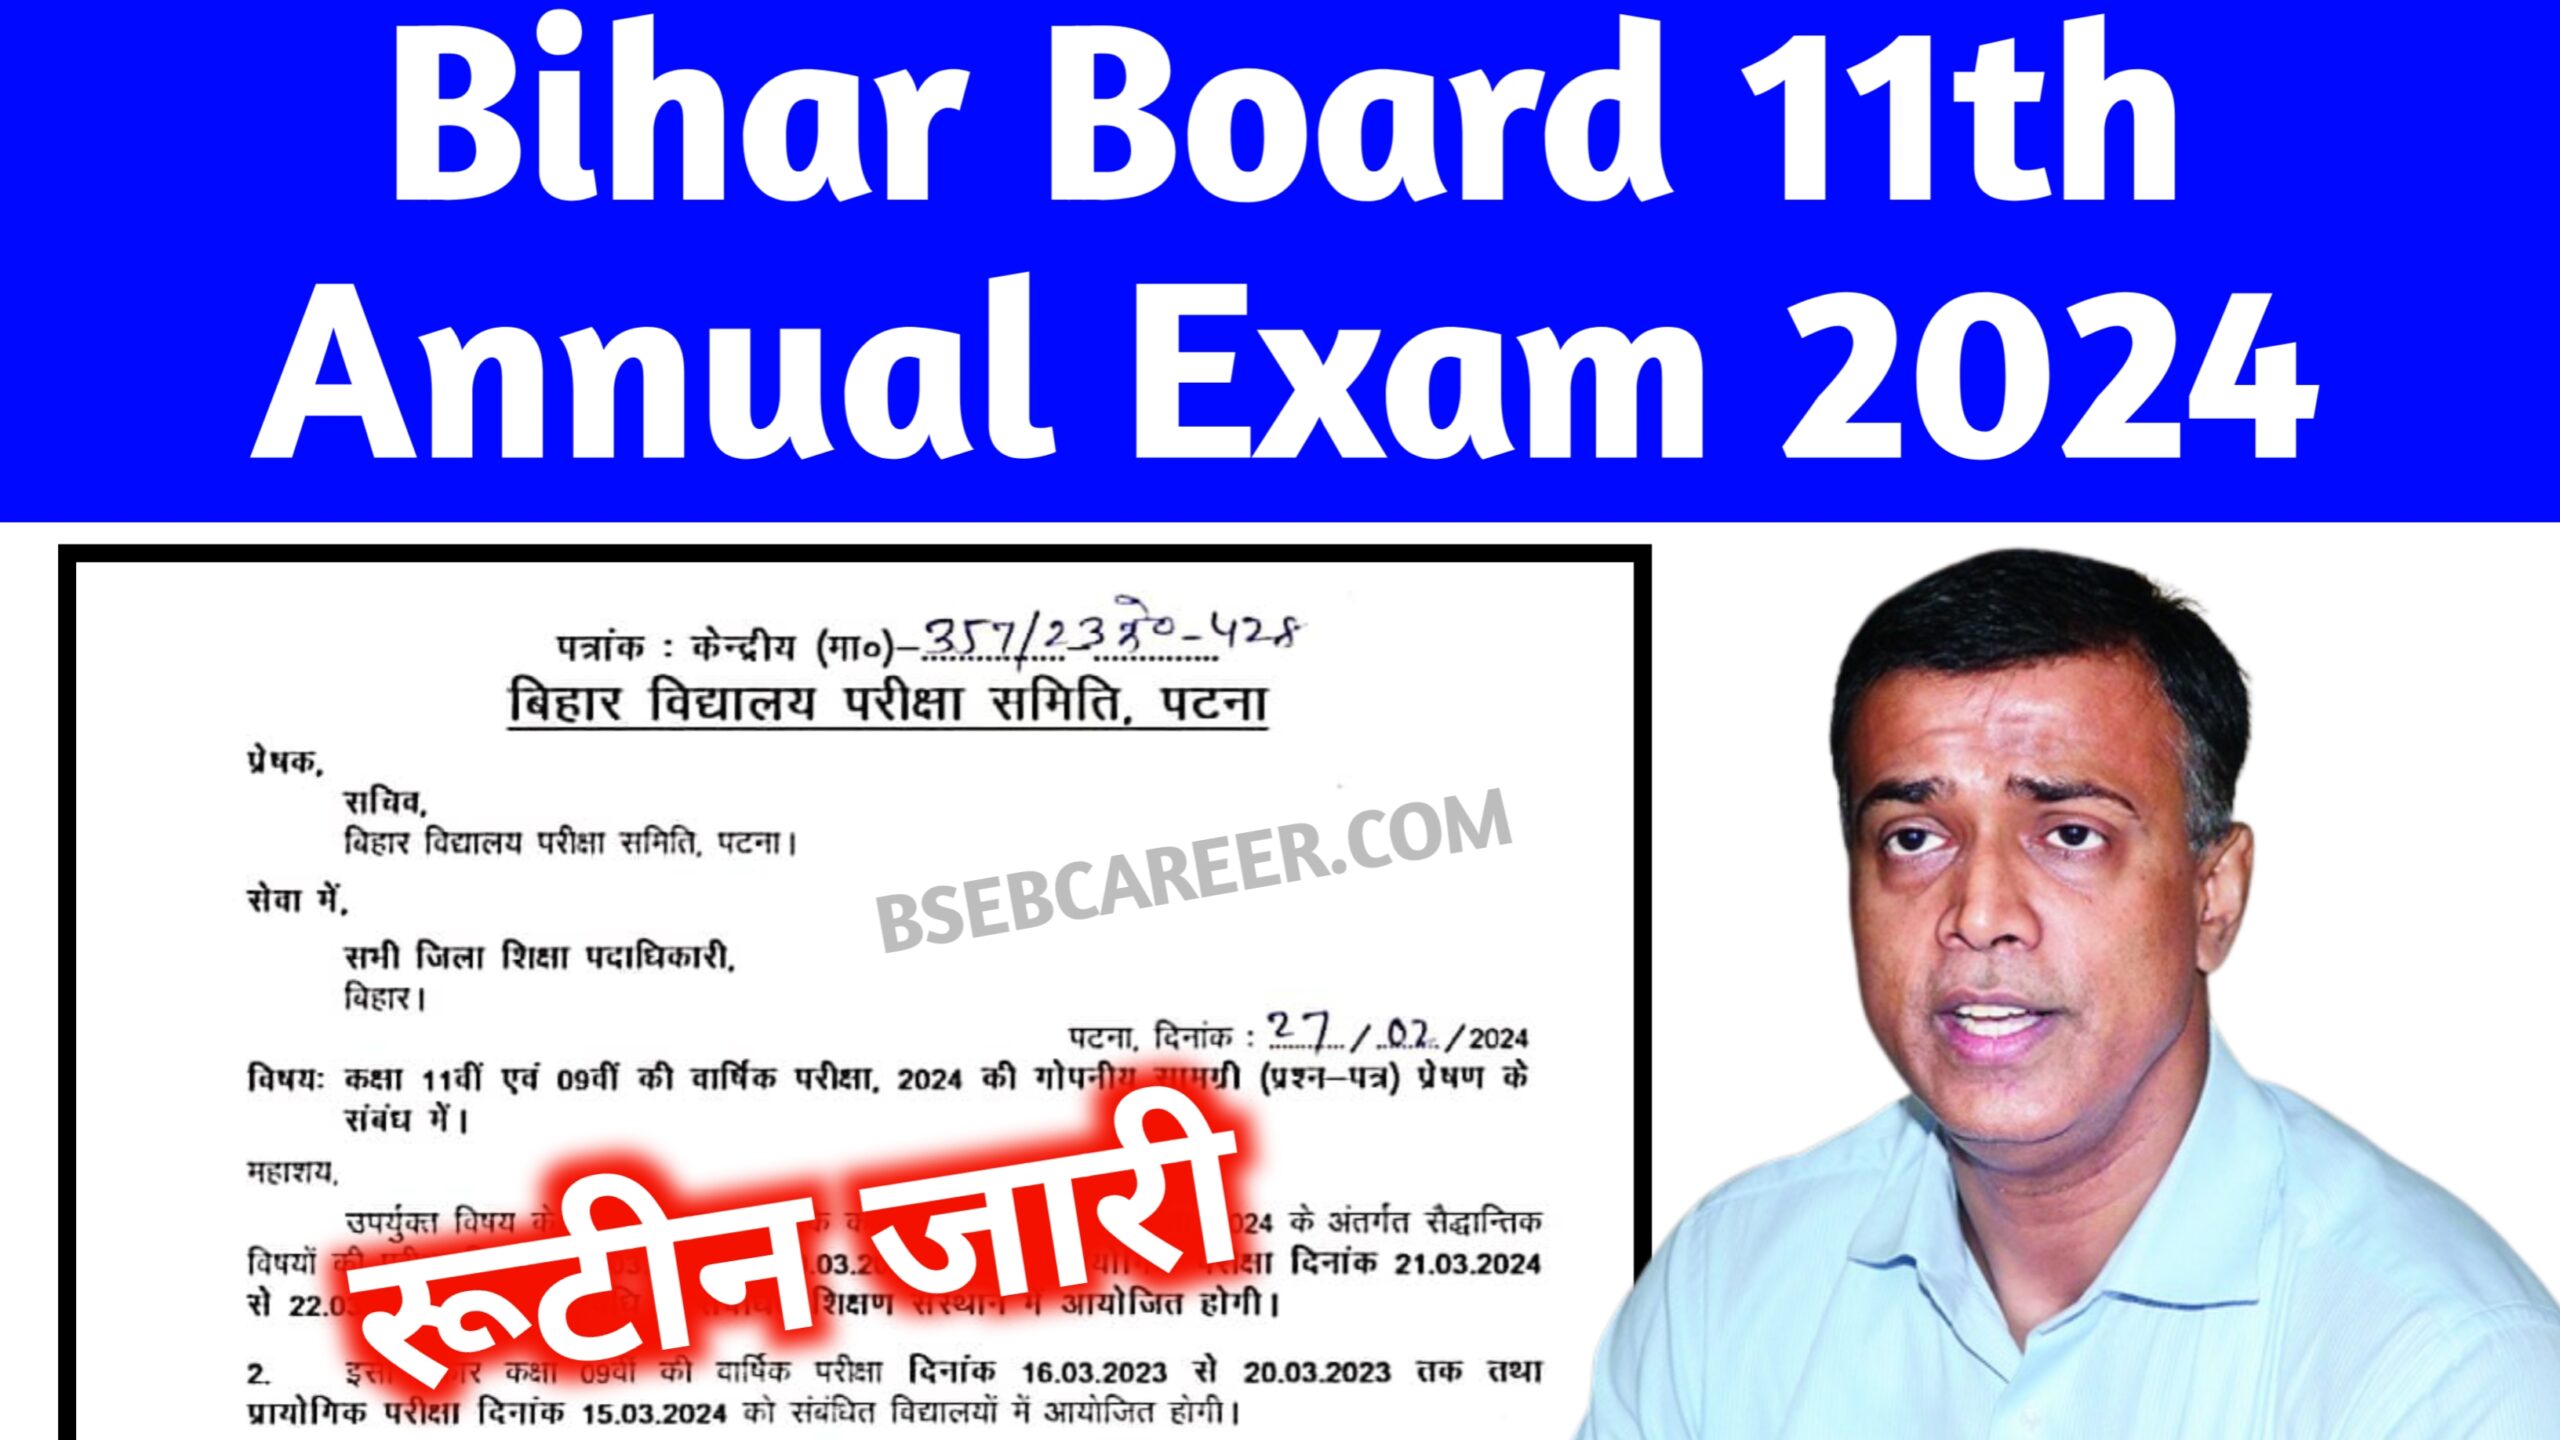 Bihar Board 11th Annual Exam 2024